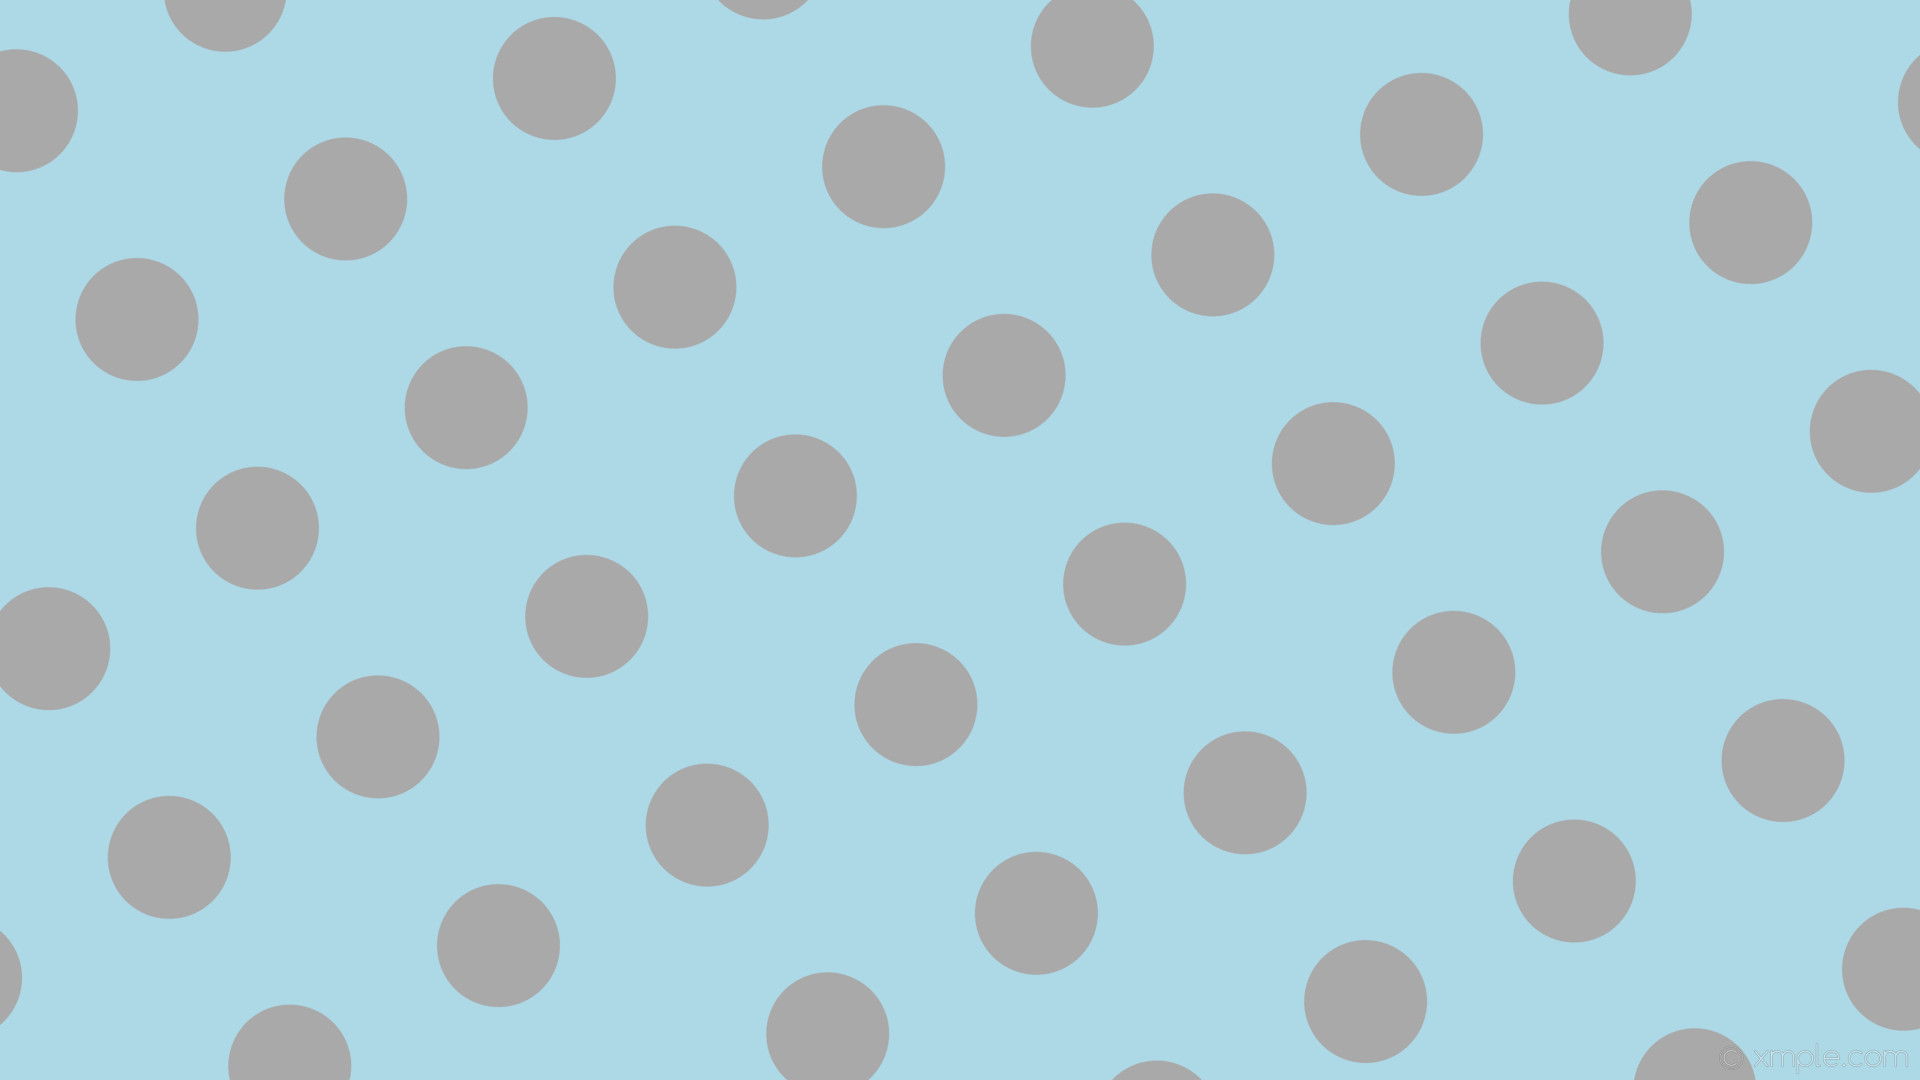 1920x1080 wallpaper spots blue grey polka dots light blue dark gray #add8e6 #a9a9a9  300Â°